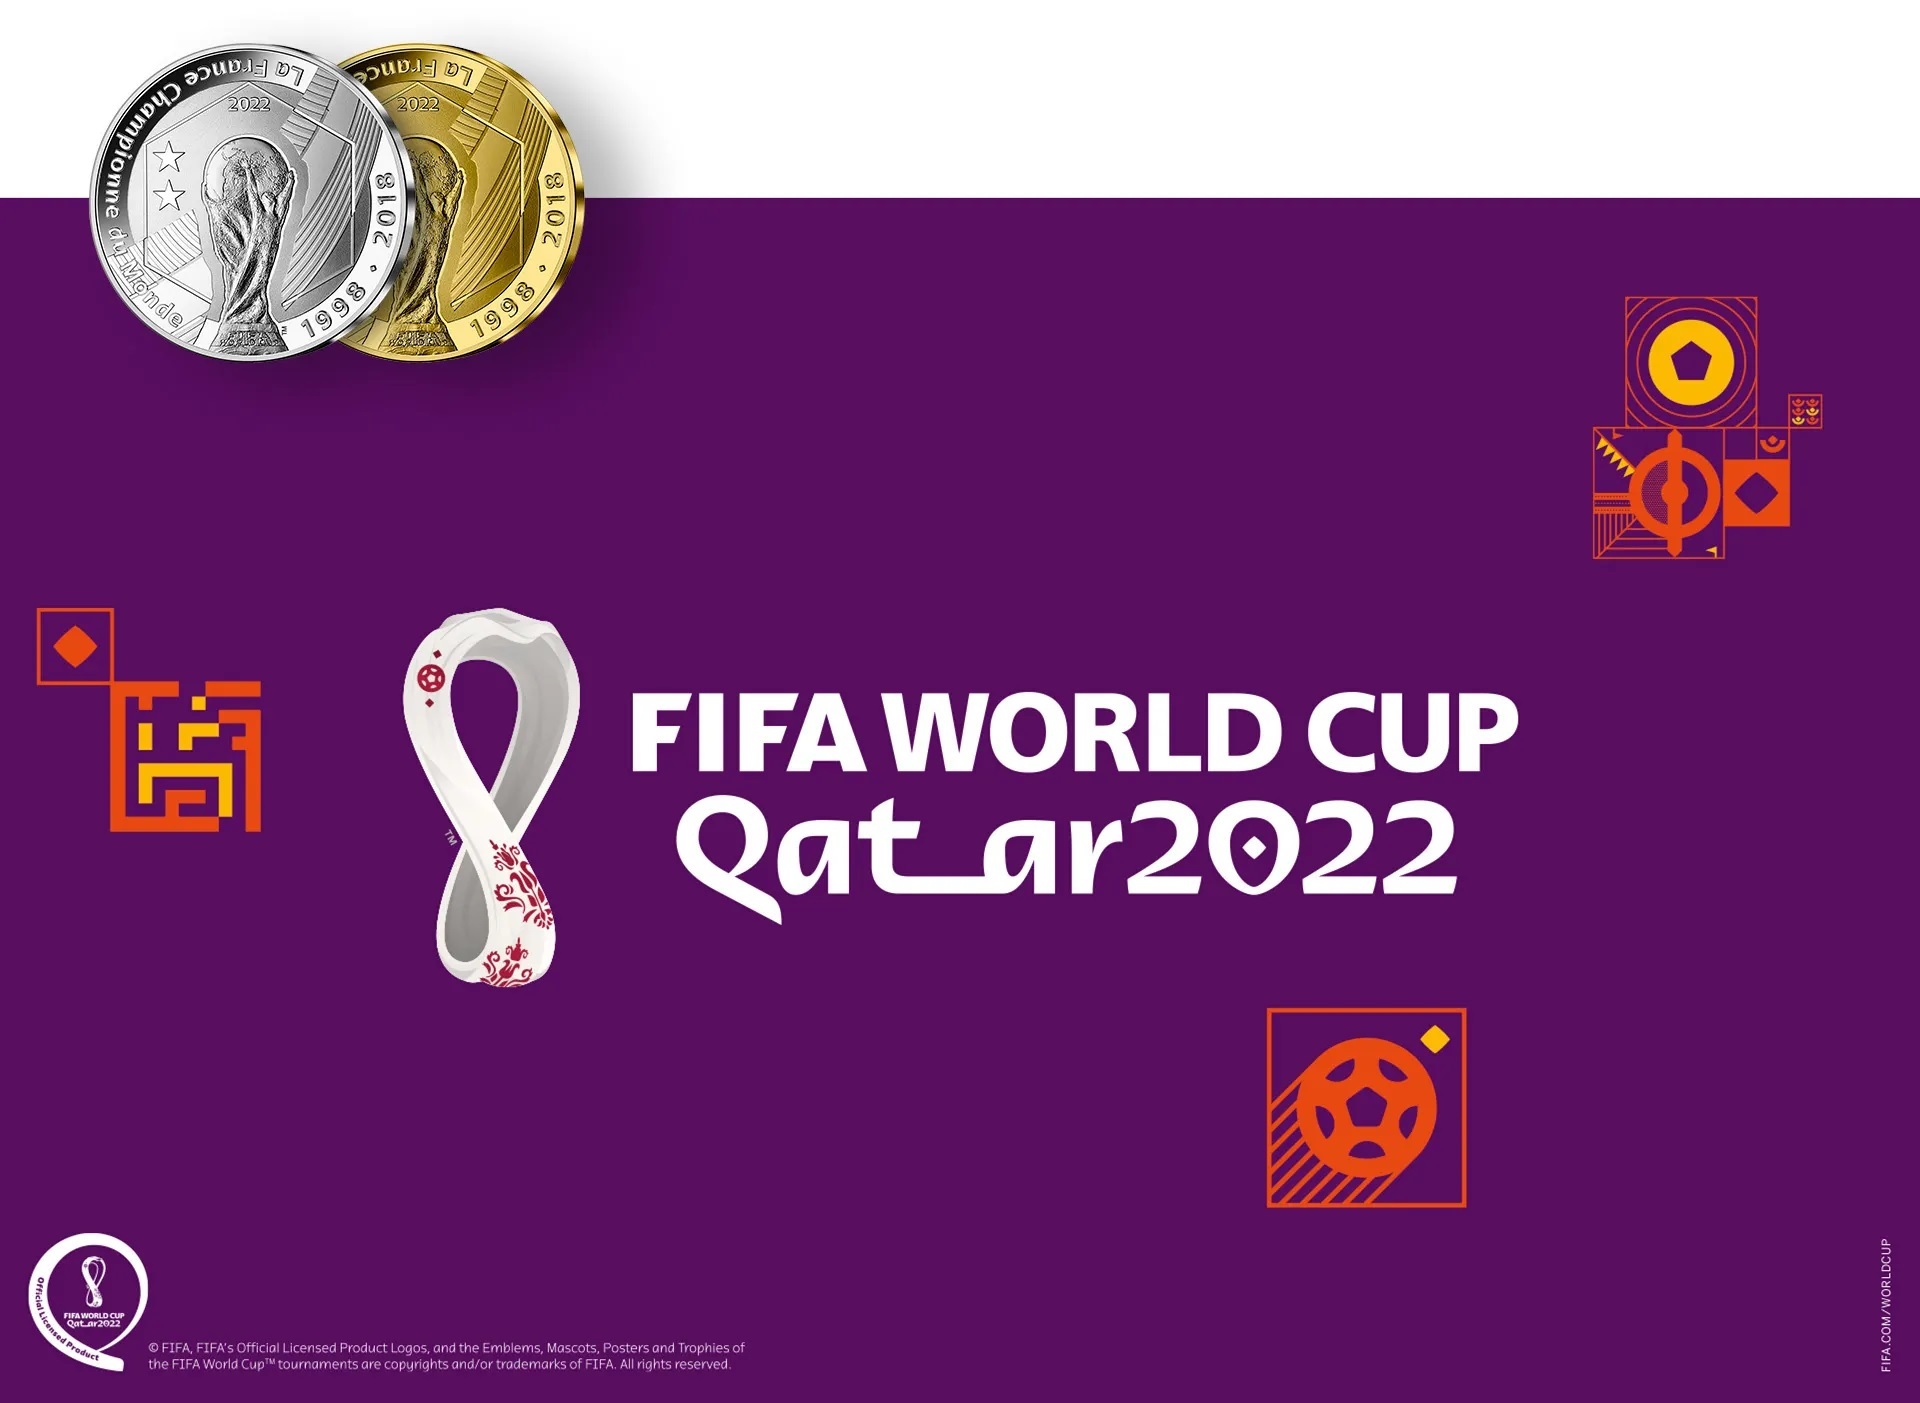 (EUR07.Proof.2022.10041364980000) 10 € France 2022 Proof Ag - FIFA World Cup Qatar (blog illustration) (zoom)